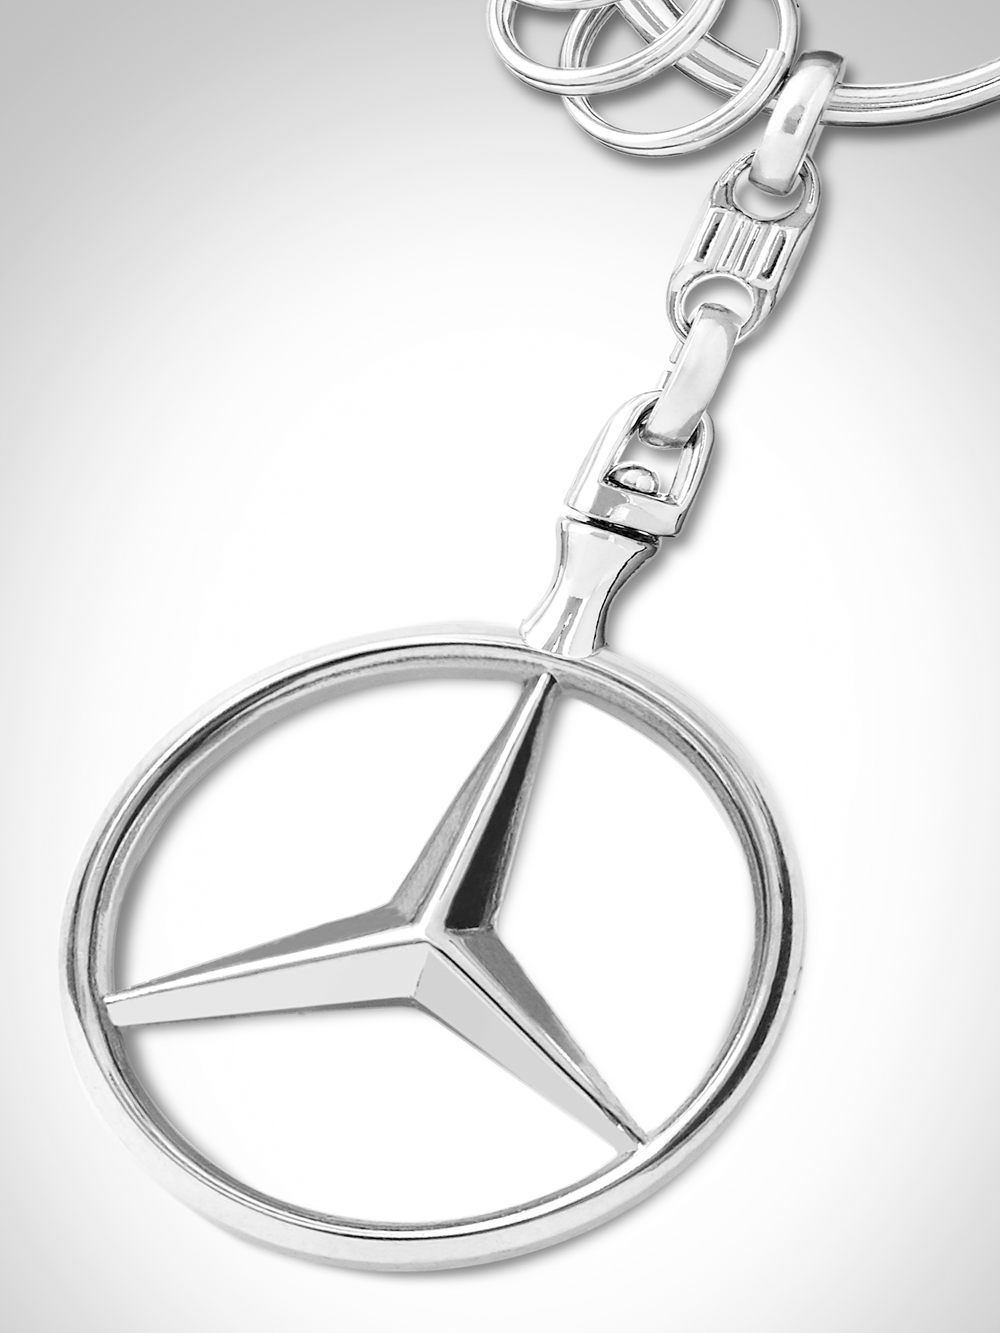 Mercedes Key Ring -  UK